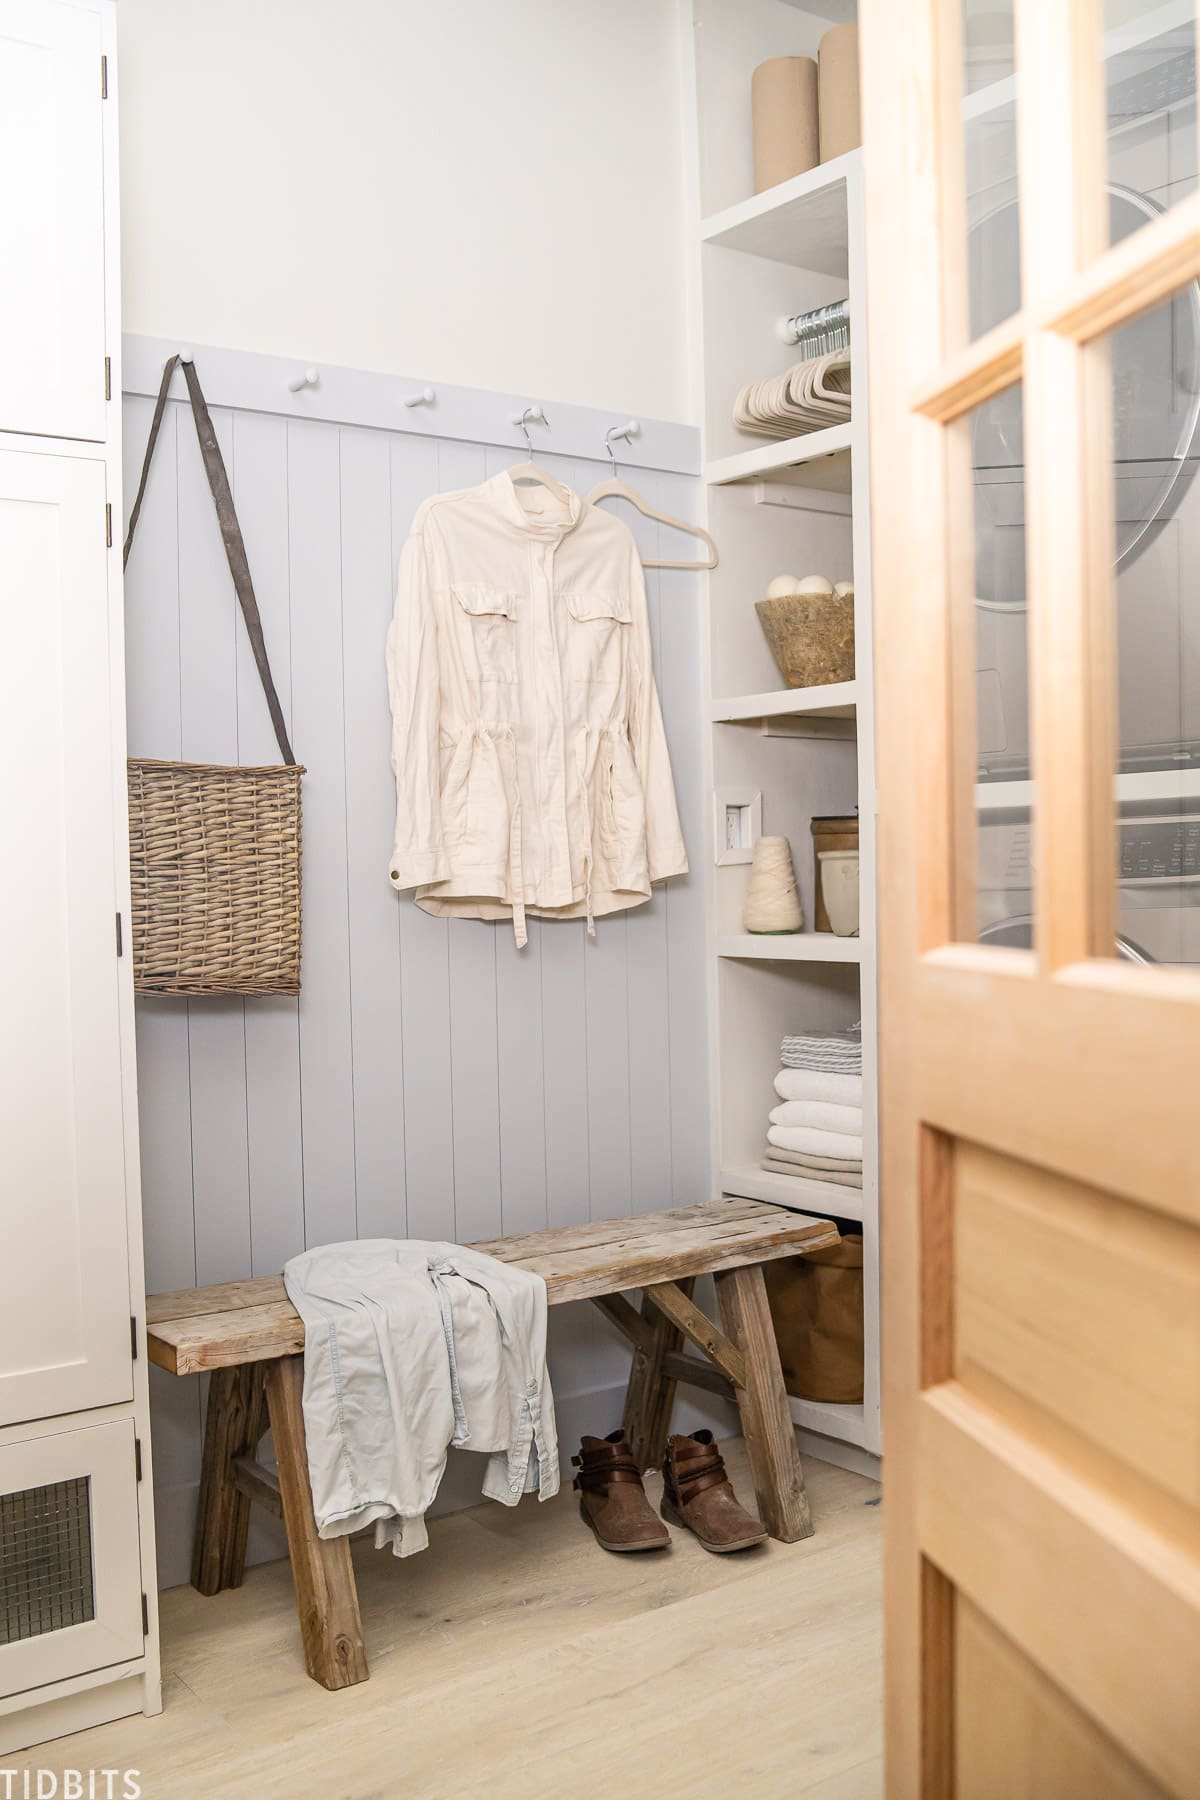 European Organic Inspired Laundry Room Design